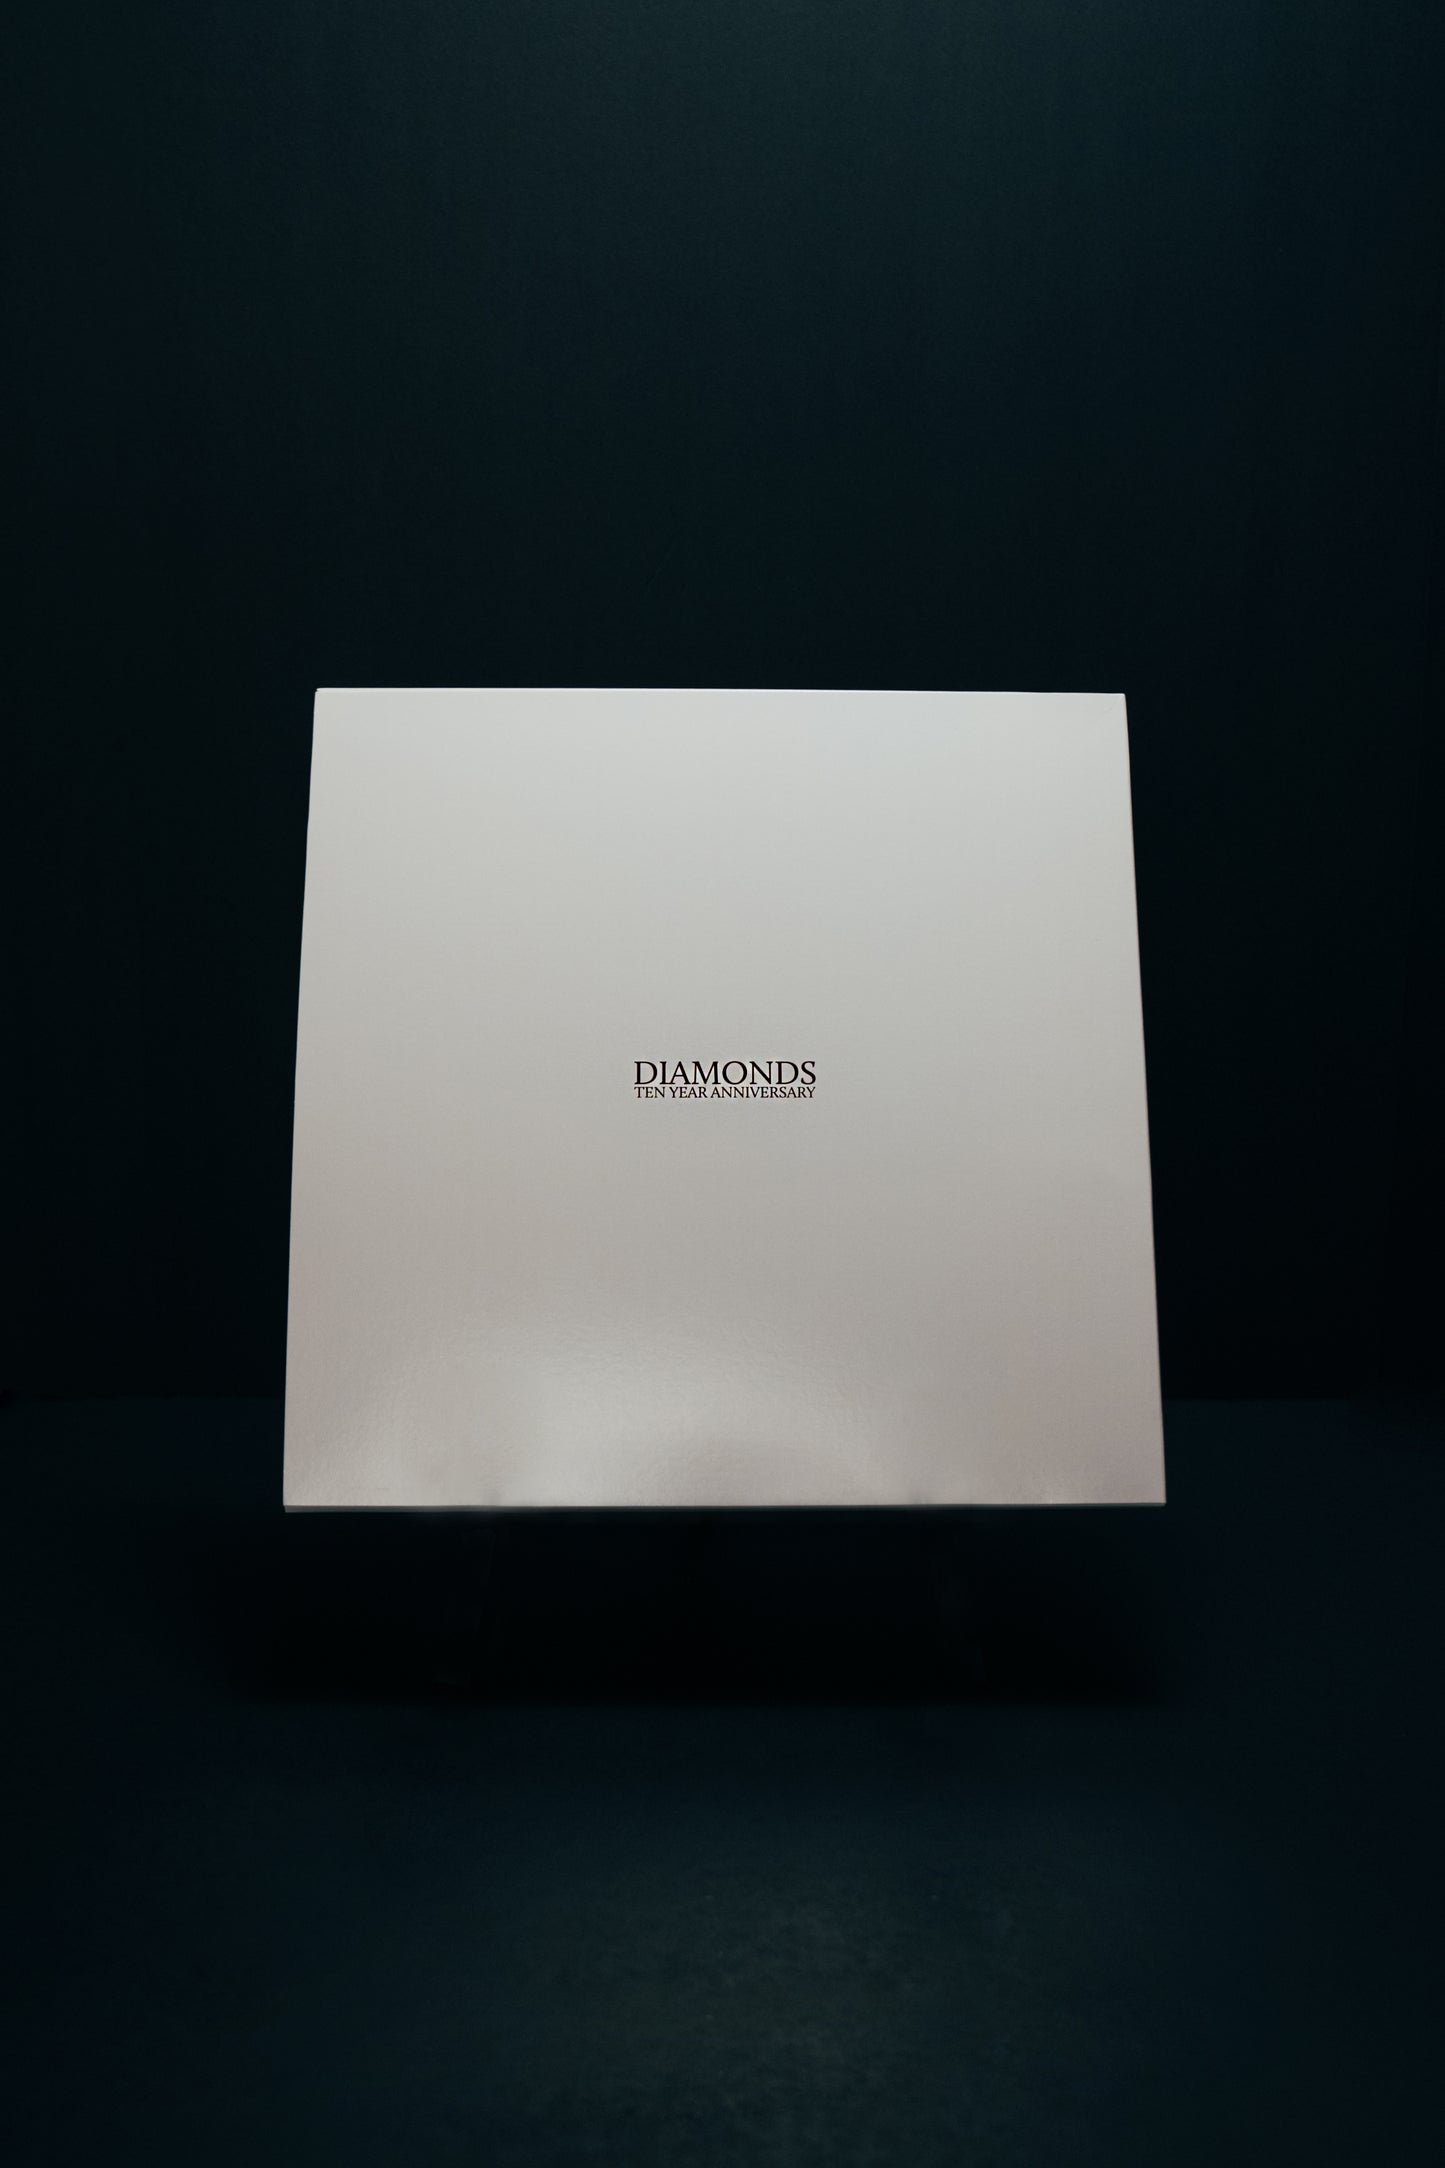 JOHNNYSWIM - Diamonds Limited Edition 10 Year Anniversary Vinyl